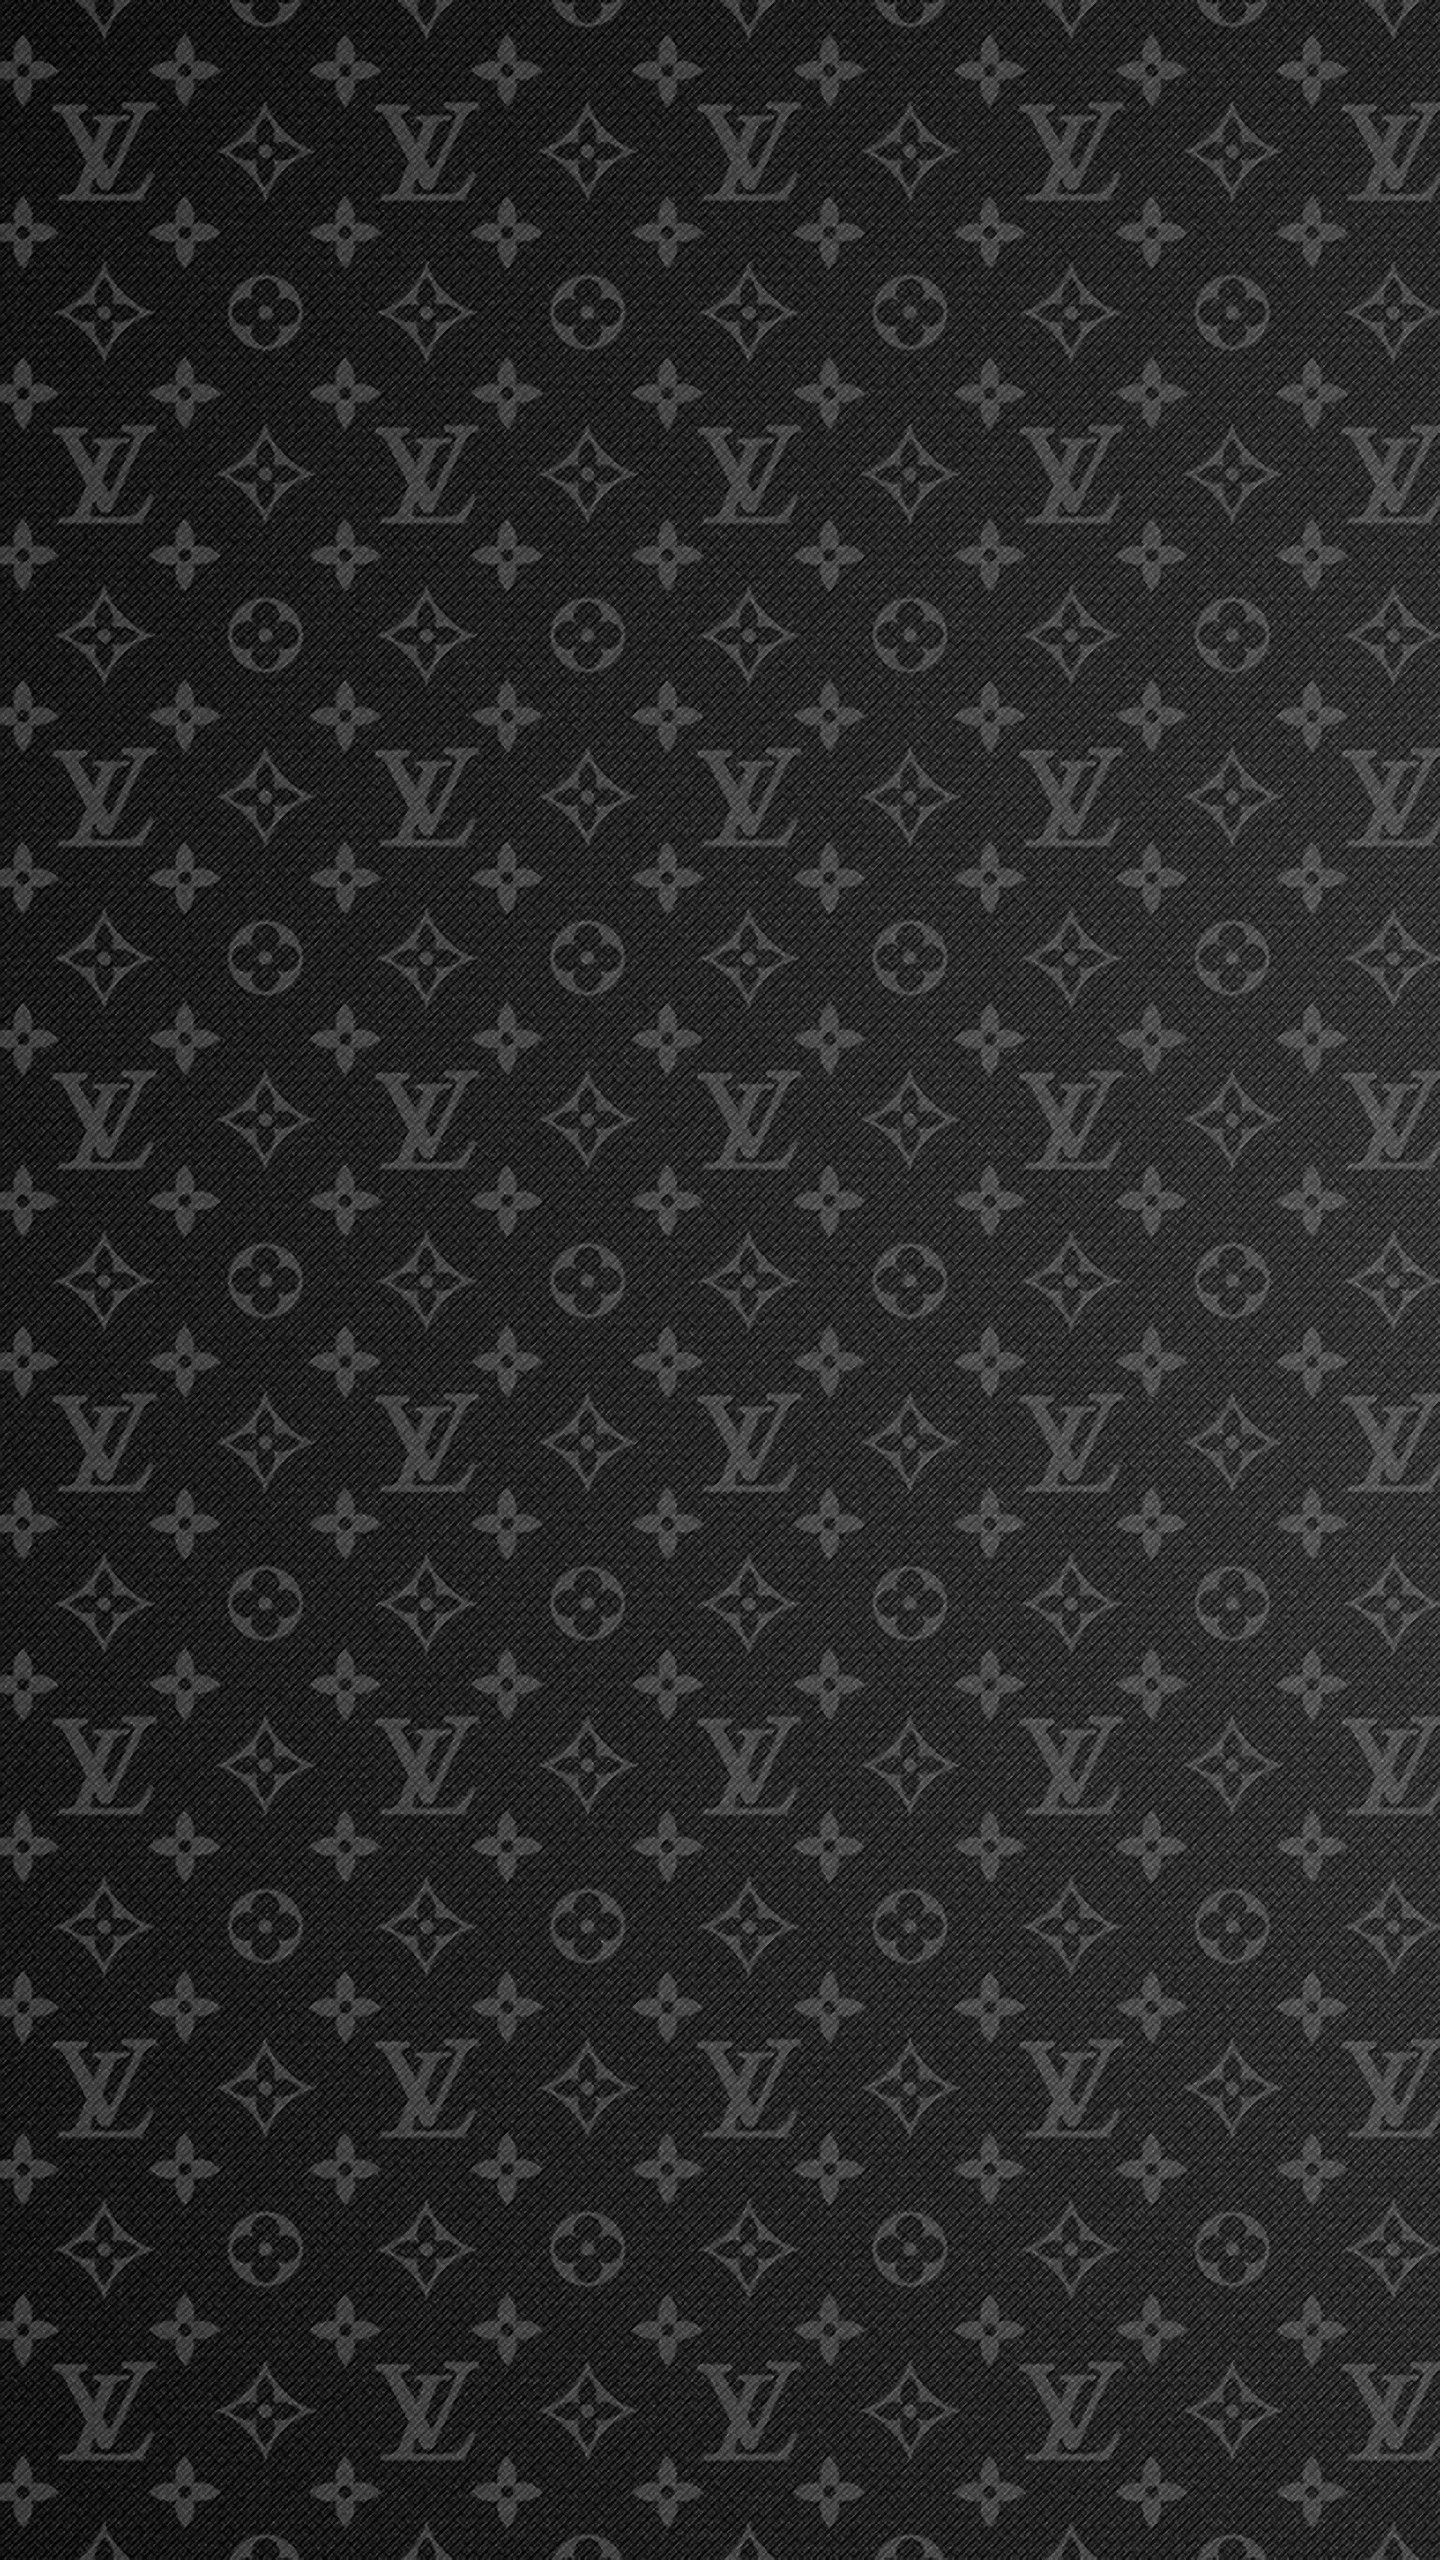 Louis Vuitton White iPhone Wallpapers on WallpaperDog